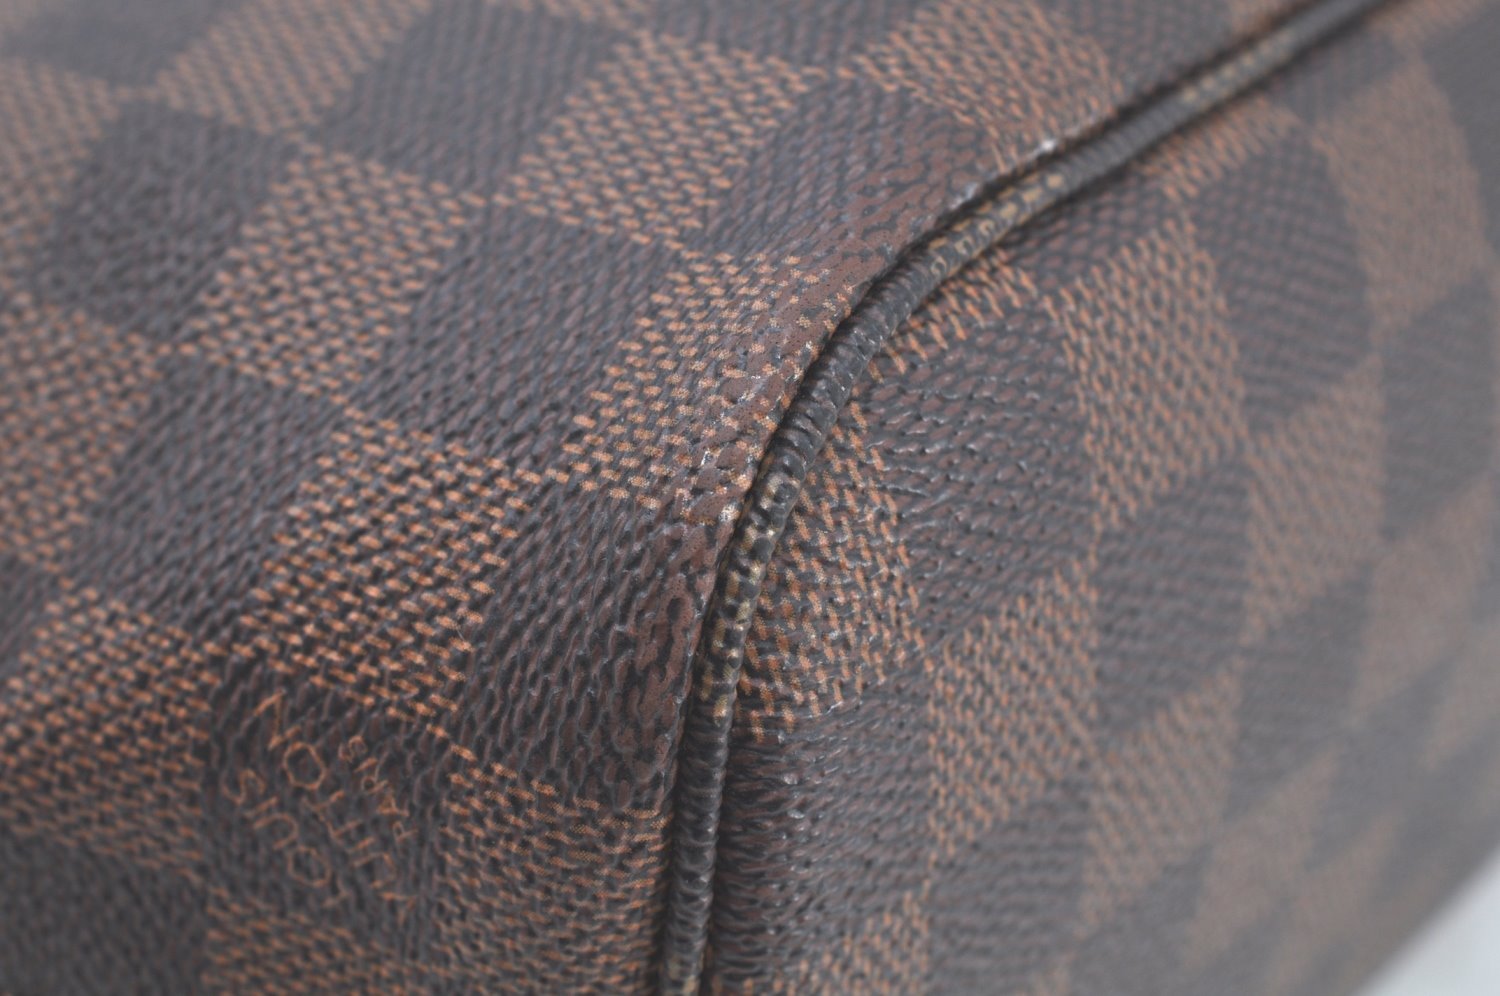 Authentic Louis Vuitton Damier Neverfull PM Shoulder Tote Bag N51109 LV K8121